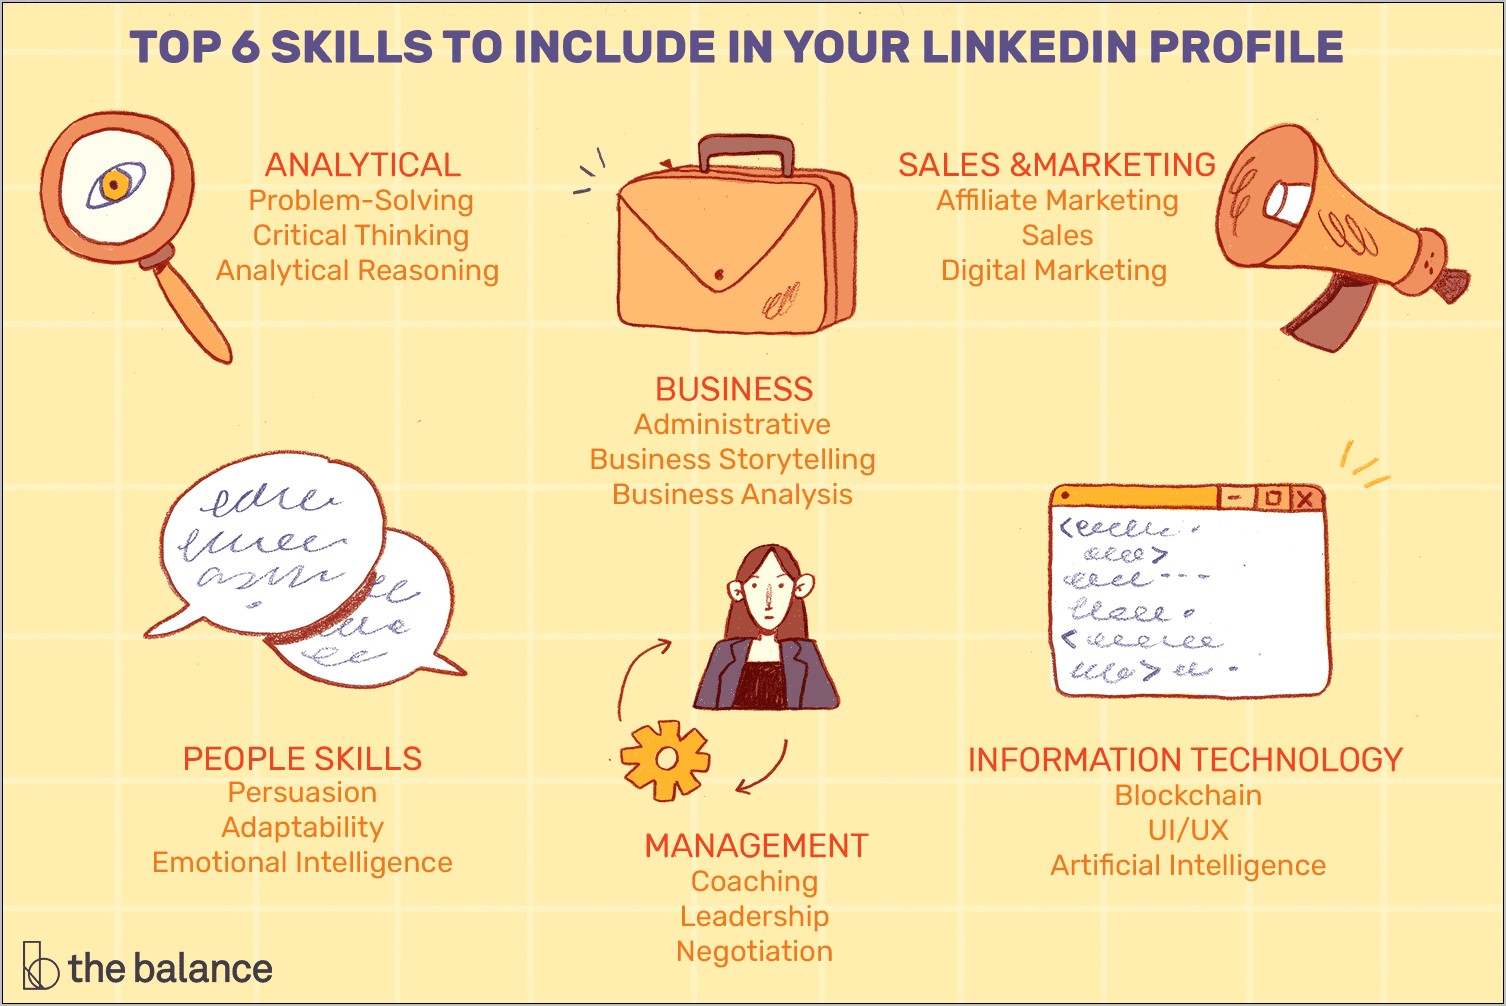 Linkedin Articles On Adding Skill Set To Resume